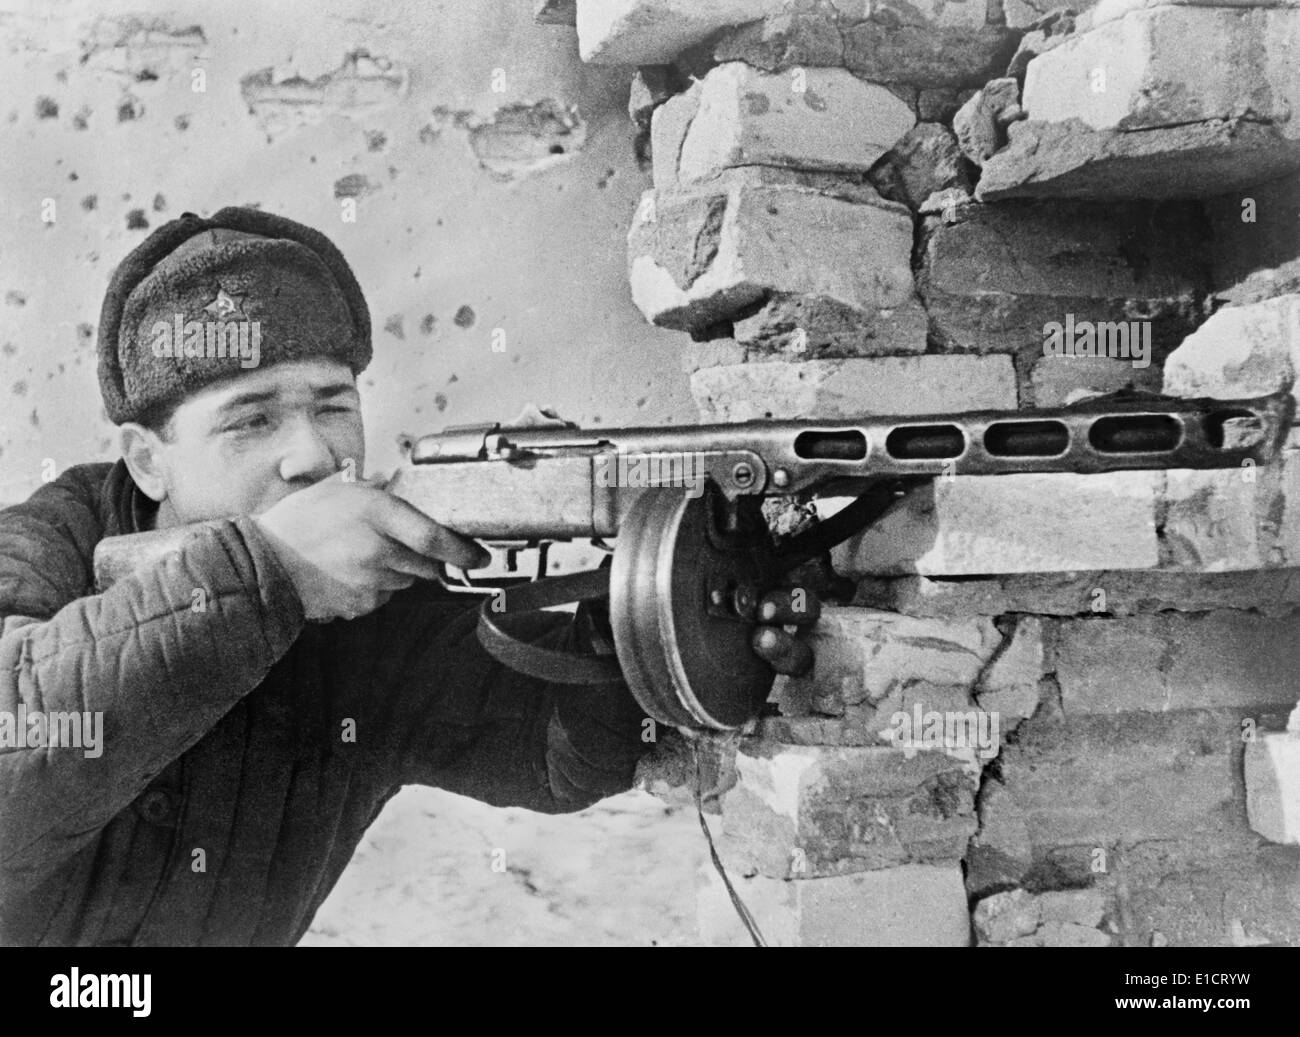 Schlacht um Stalingrad, 2. Weltkrieg. Rote Armee Maschinengewehrschütze Kugel Tasche Wand. Oktober 1942-Februar 1943. Foto von Georgii Zelma. Stockfoto